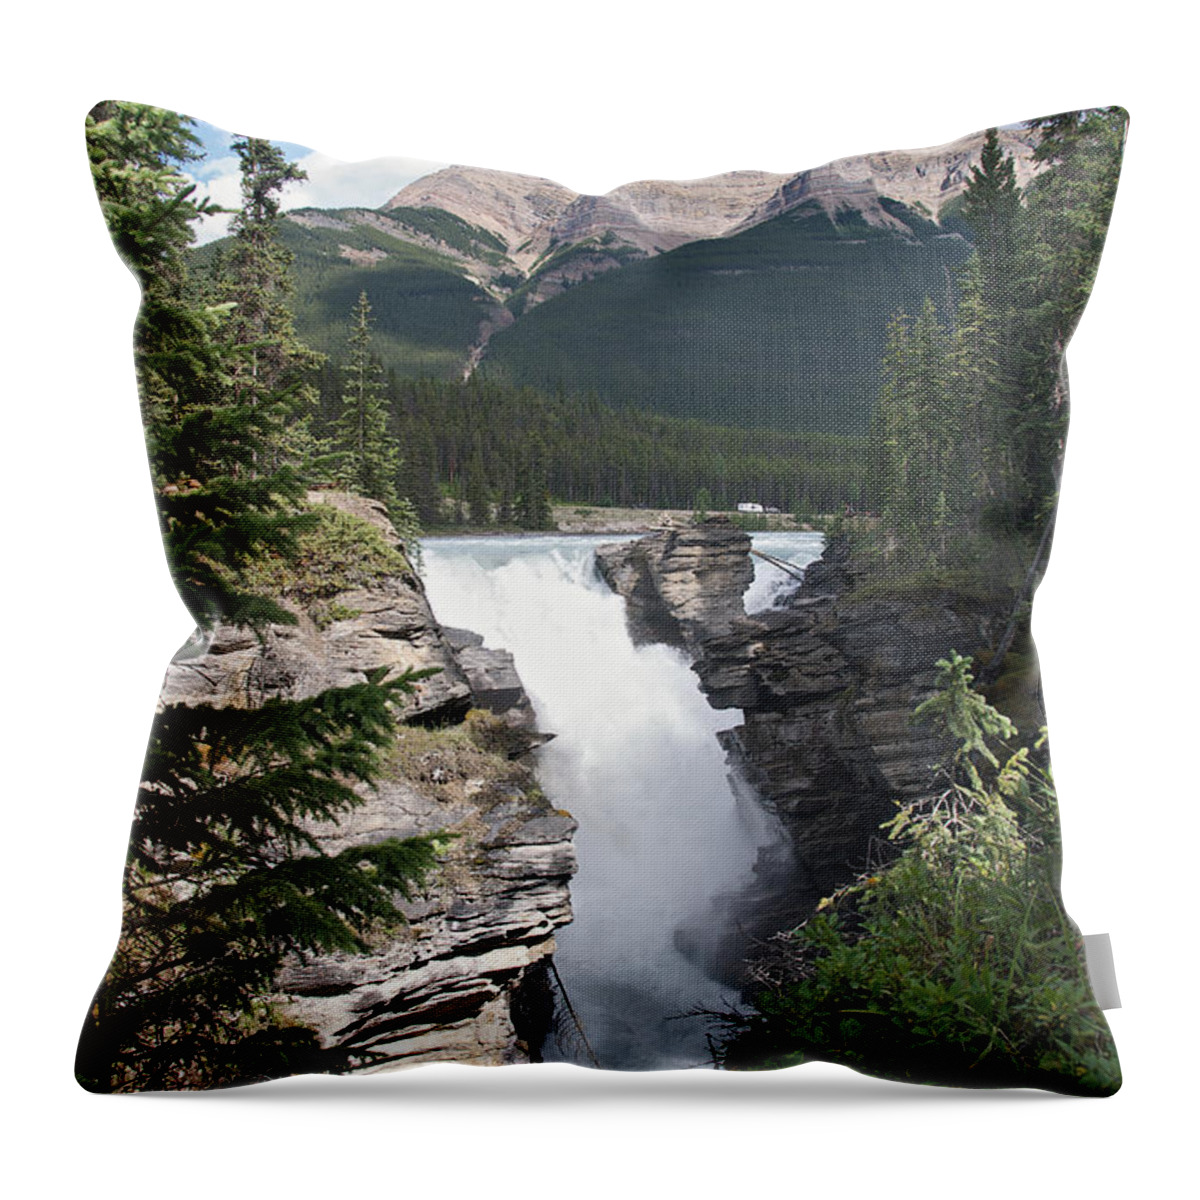  Jasper Throw Pillow featuring the photograph Athabasca Falls by David Kleinsasser